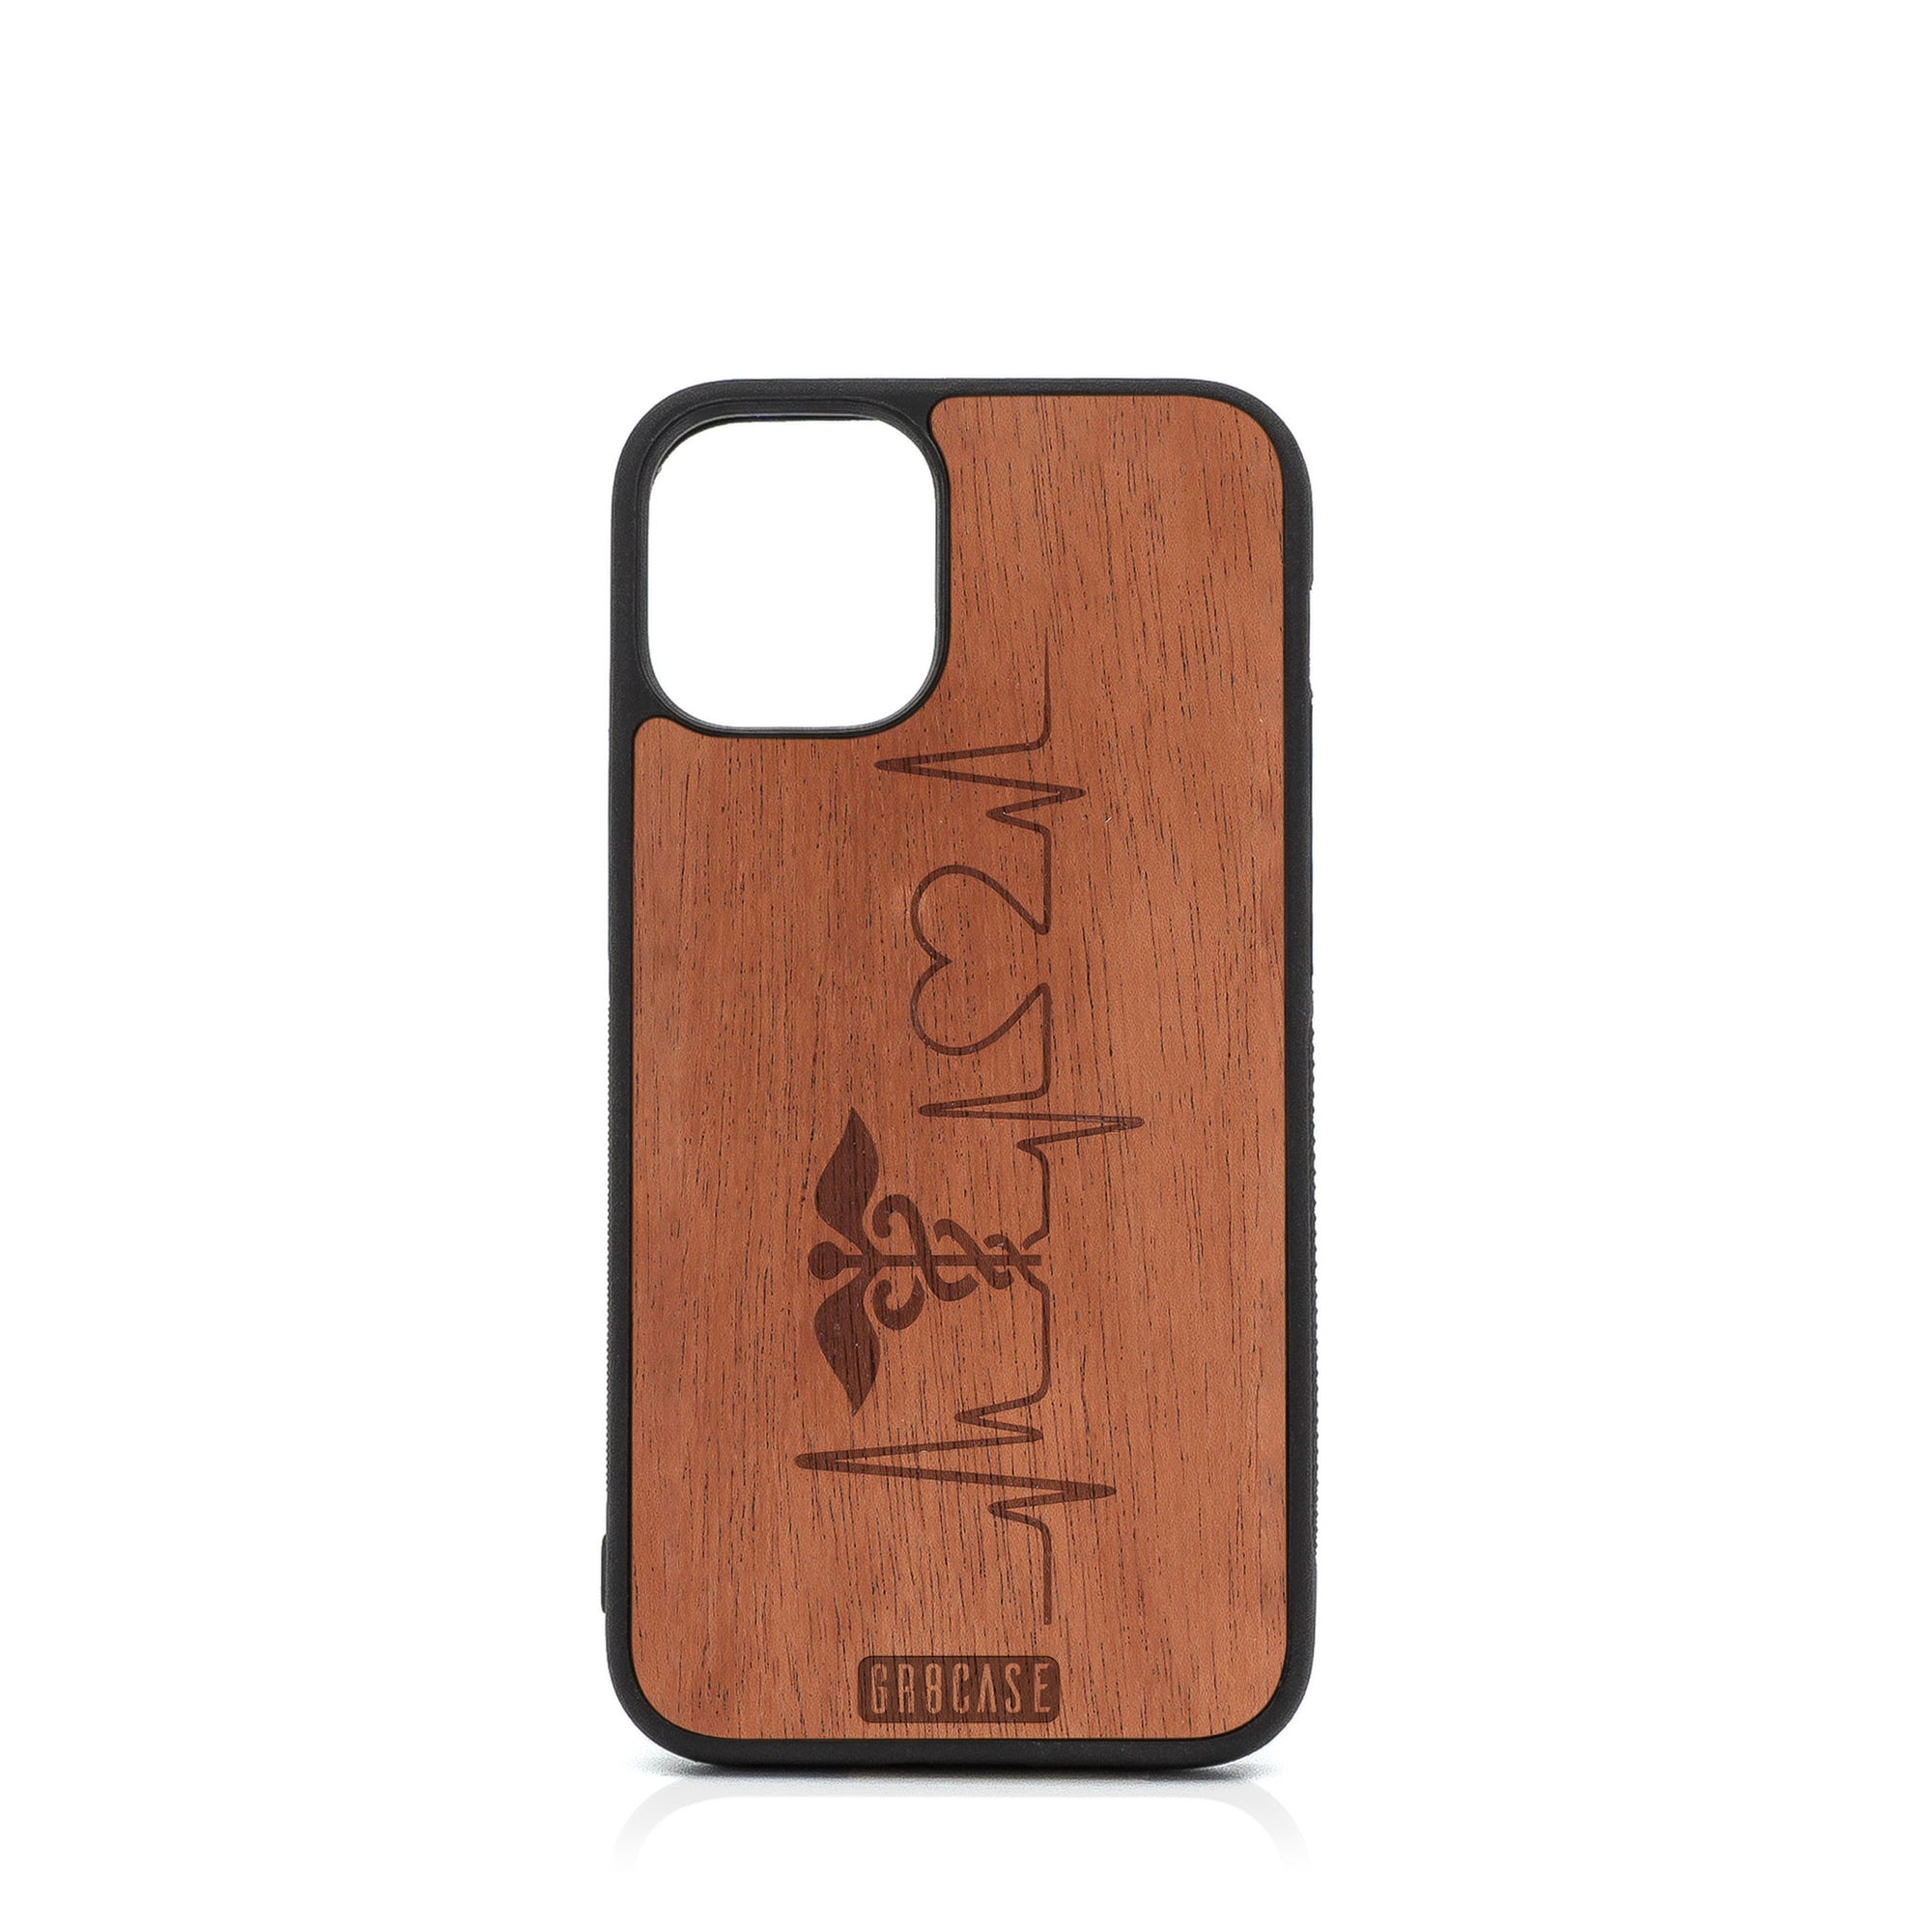 Hero's Heart (Nurse, Doctor) Theme Design Wood Case For iPhone 12 Mini